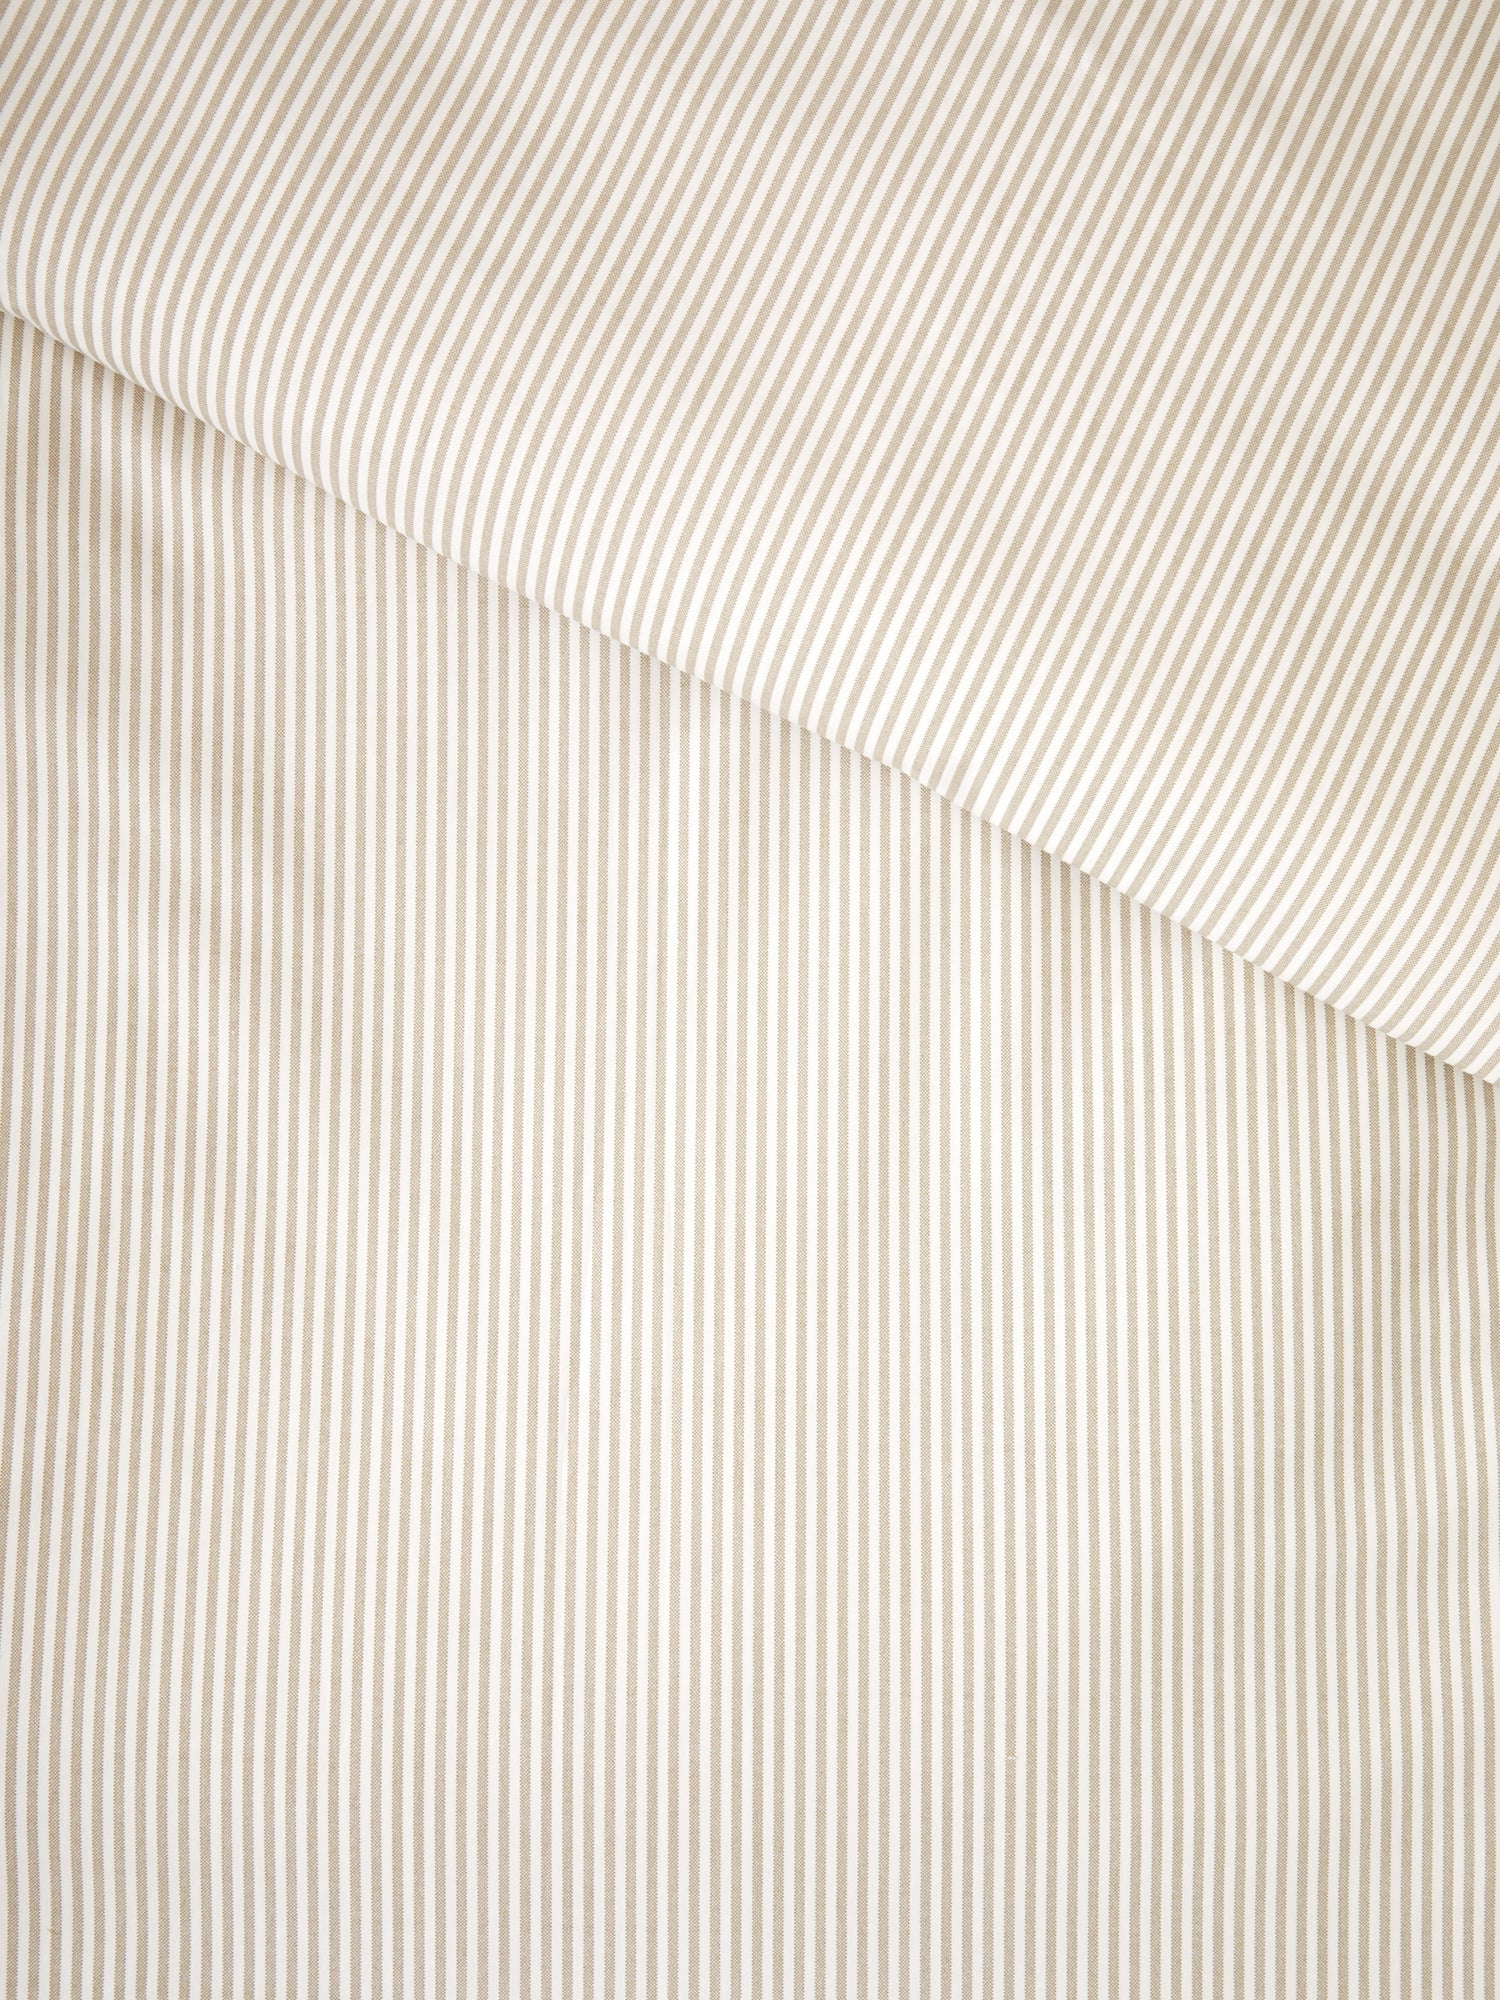 Purity Organic Cotton Duvet Cover Set in Blue Stripe